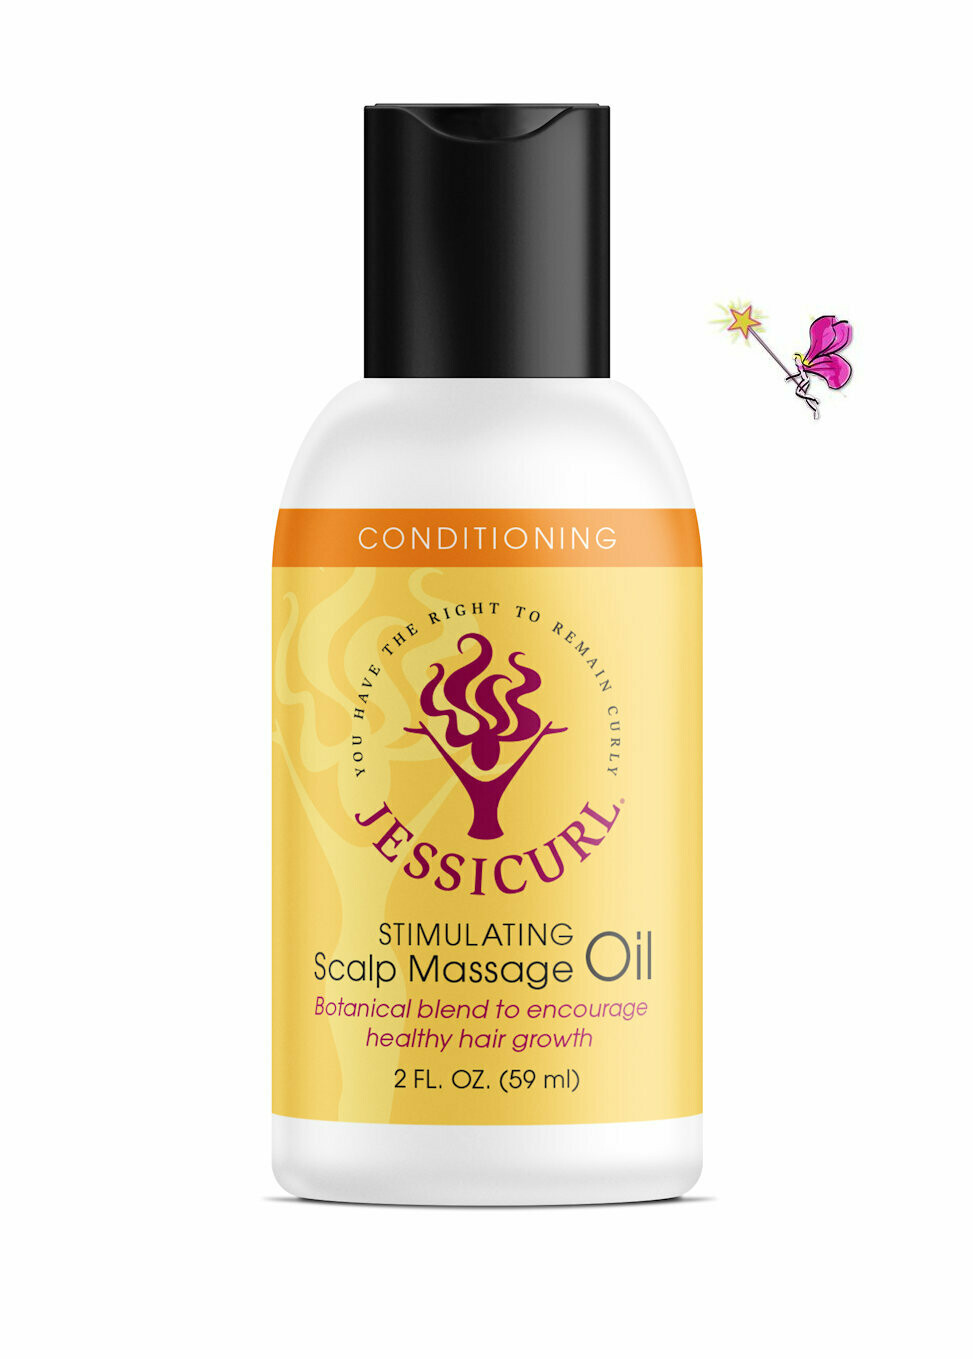 Jessicurl Stimulating Scalp Massage Oil No Fragrance Added 59ml (2oz)